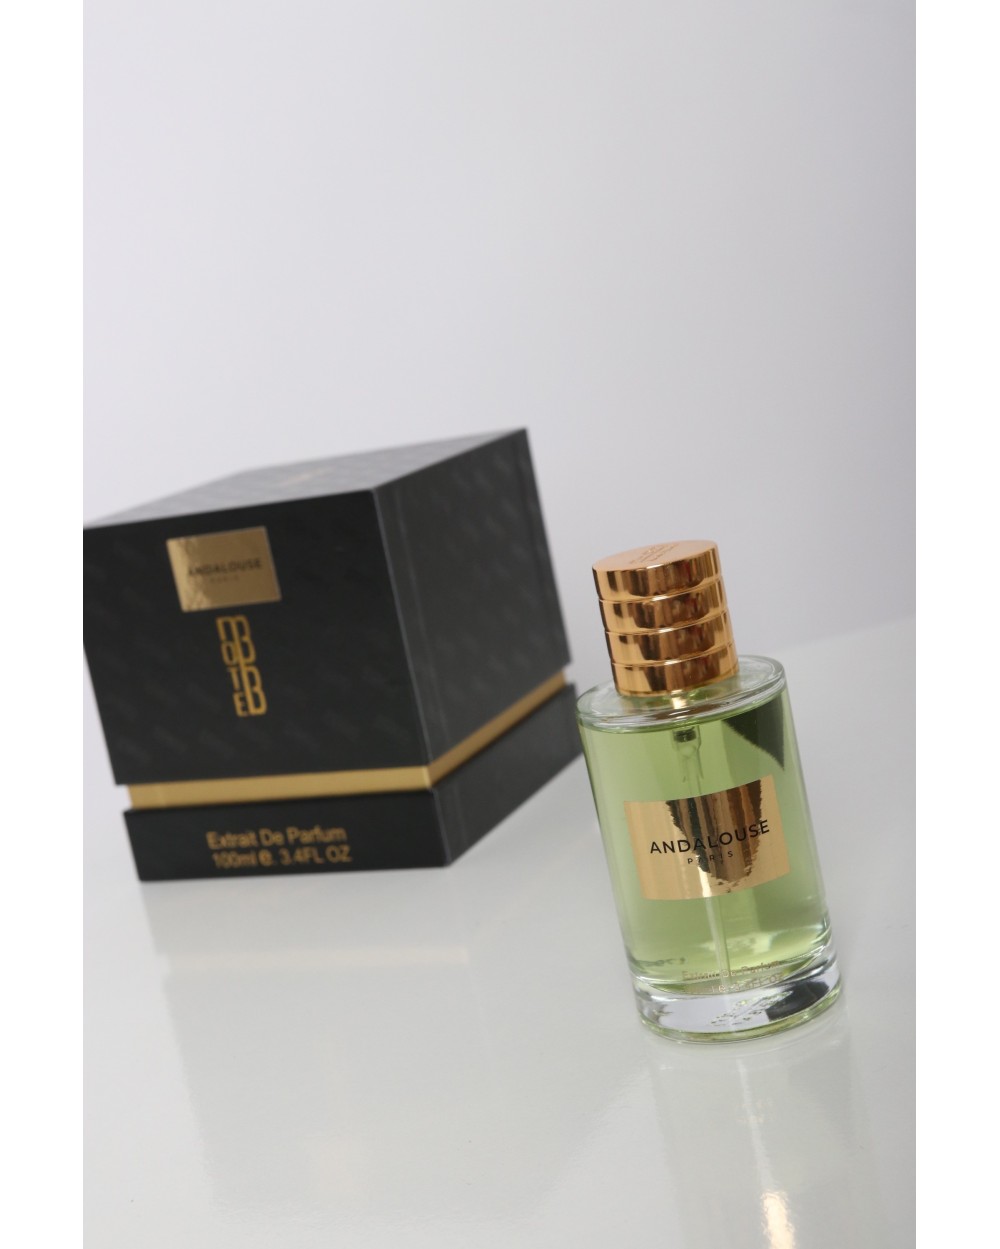 Andalusian perfume 100 ml